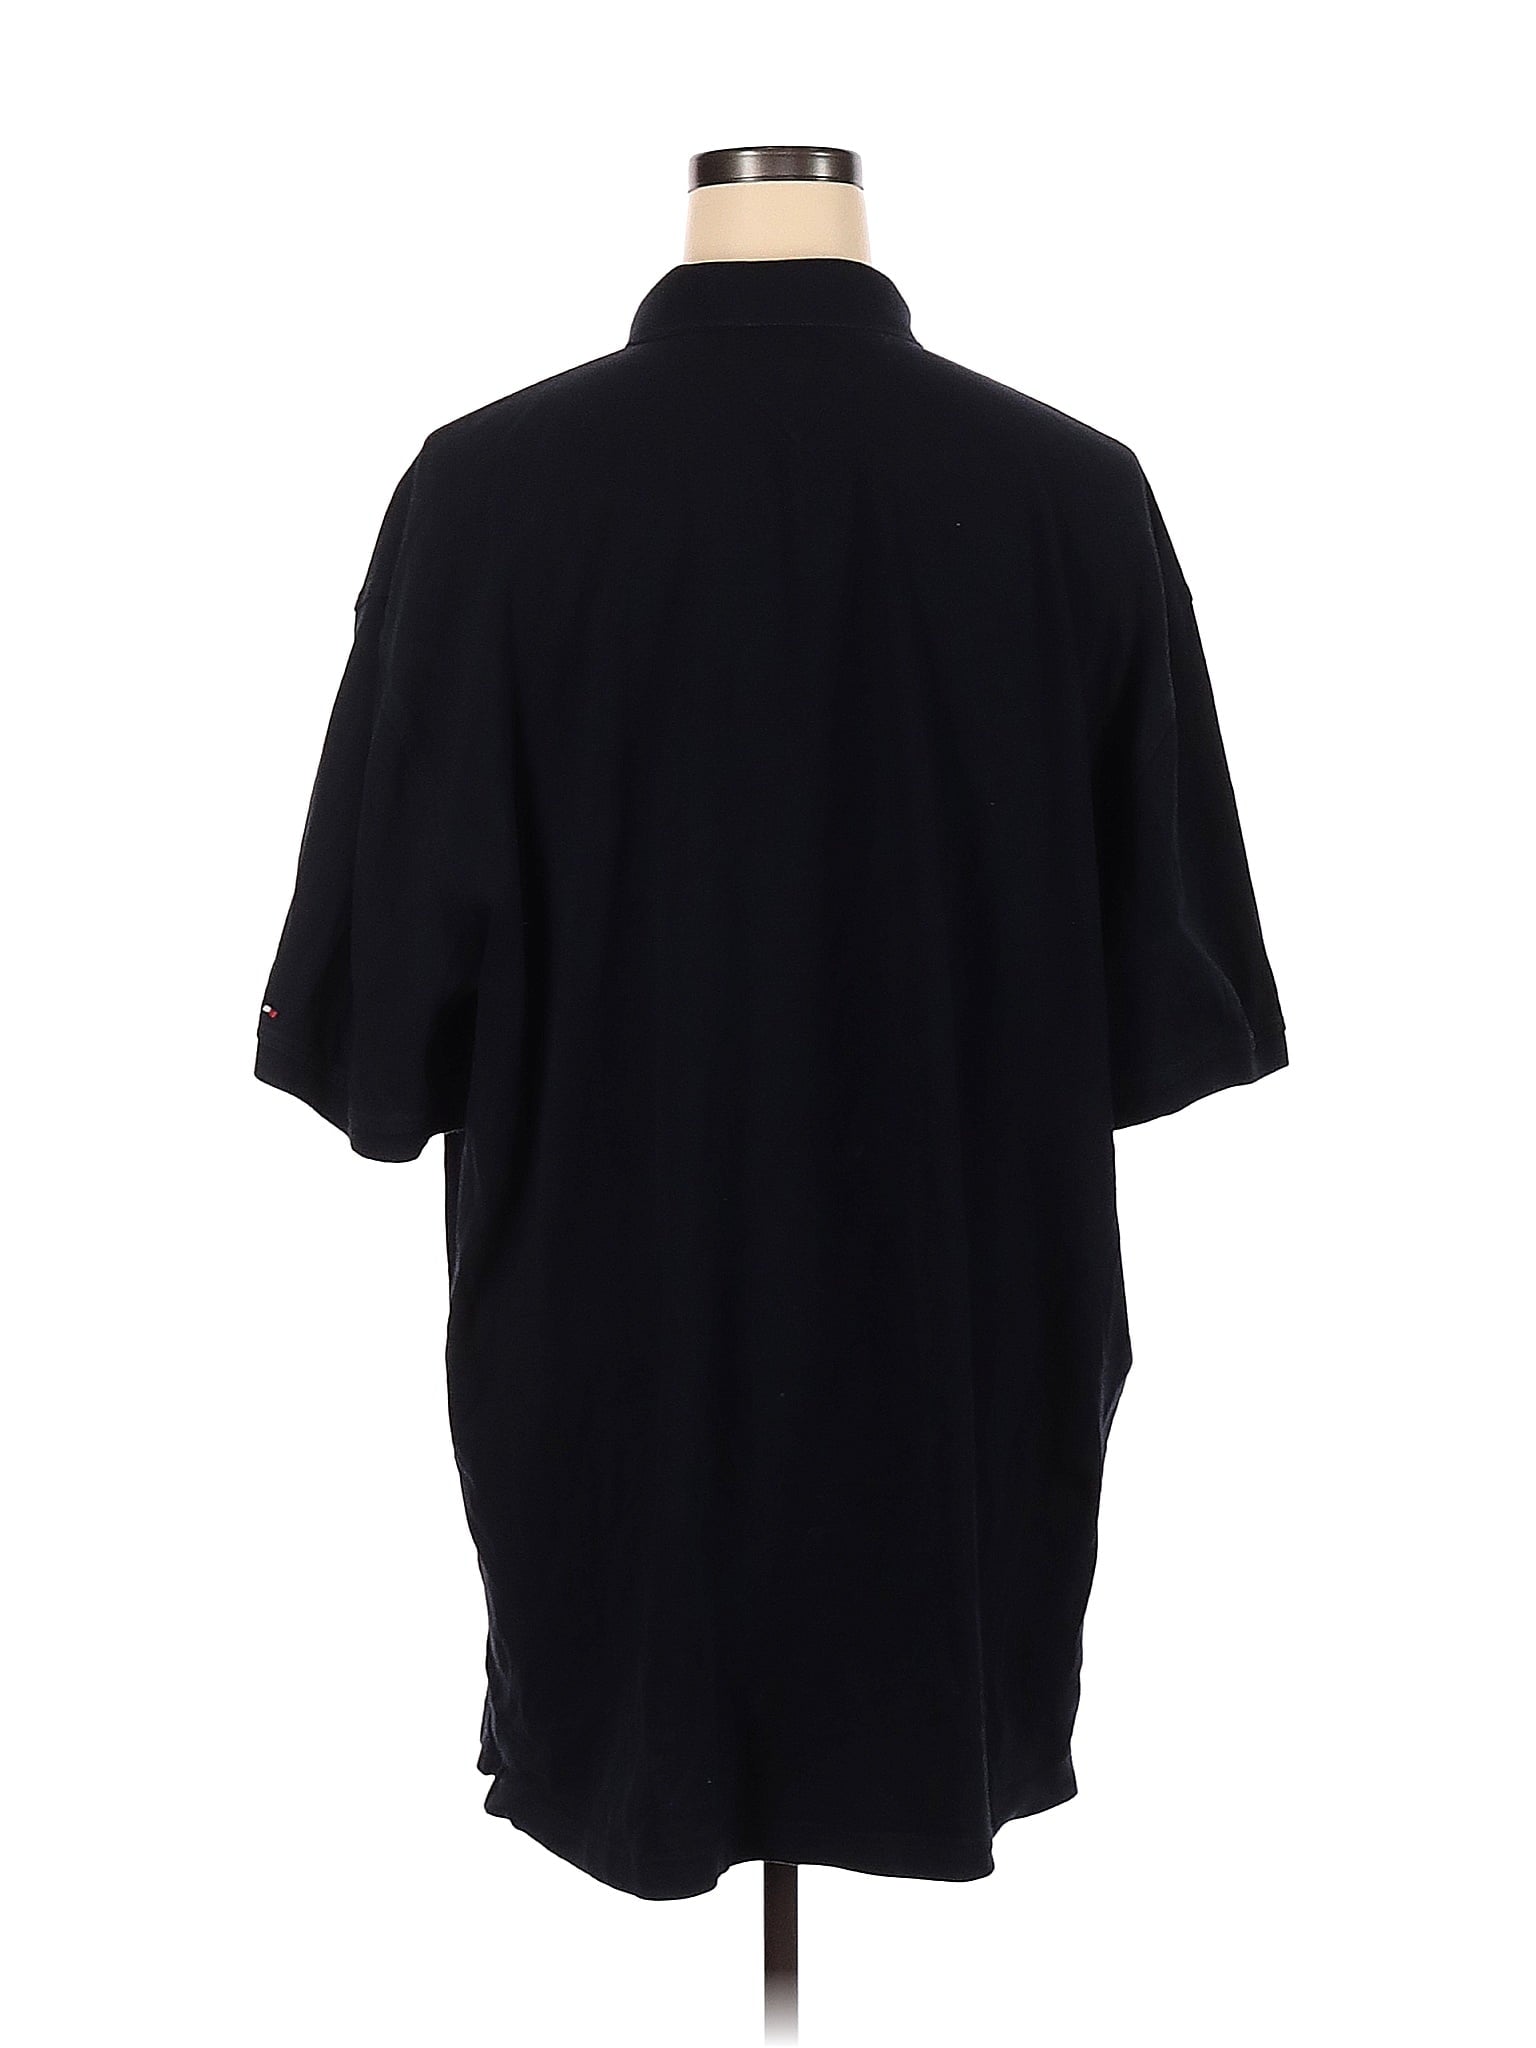 Polo Shirt size - XXXL